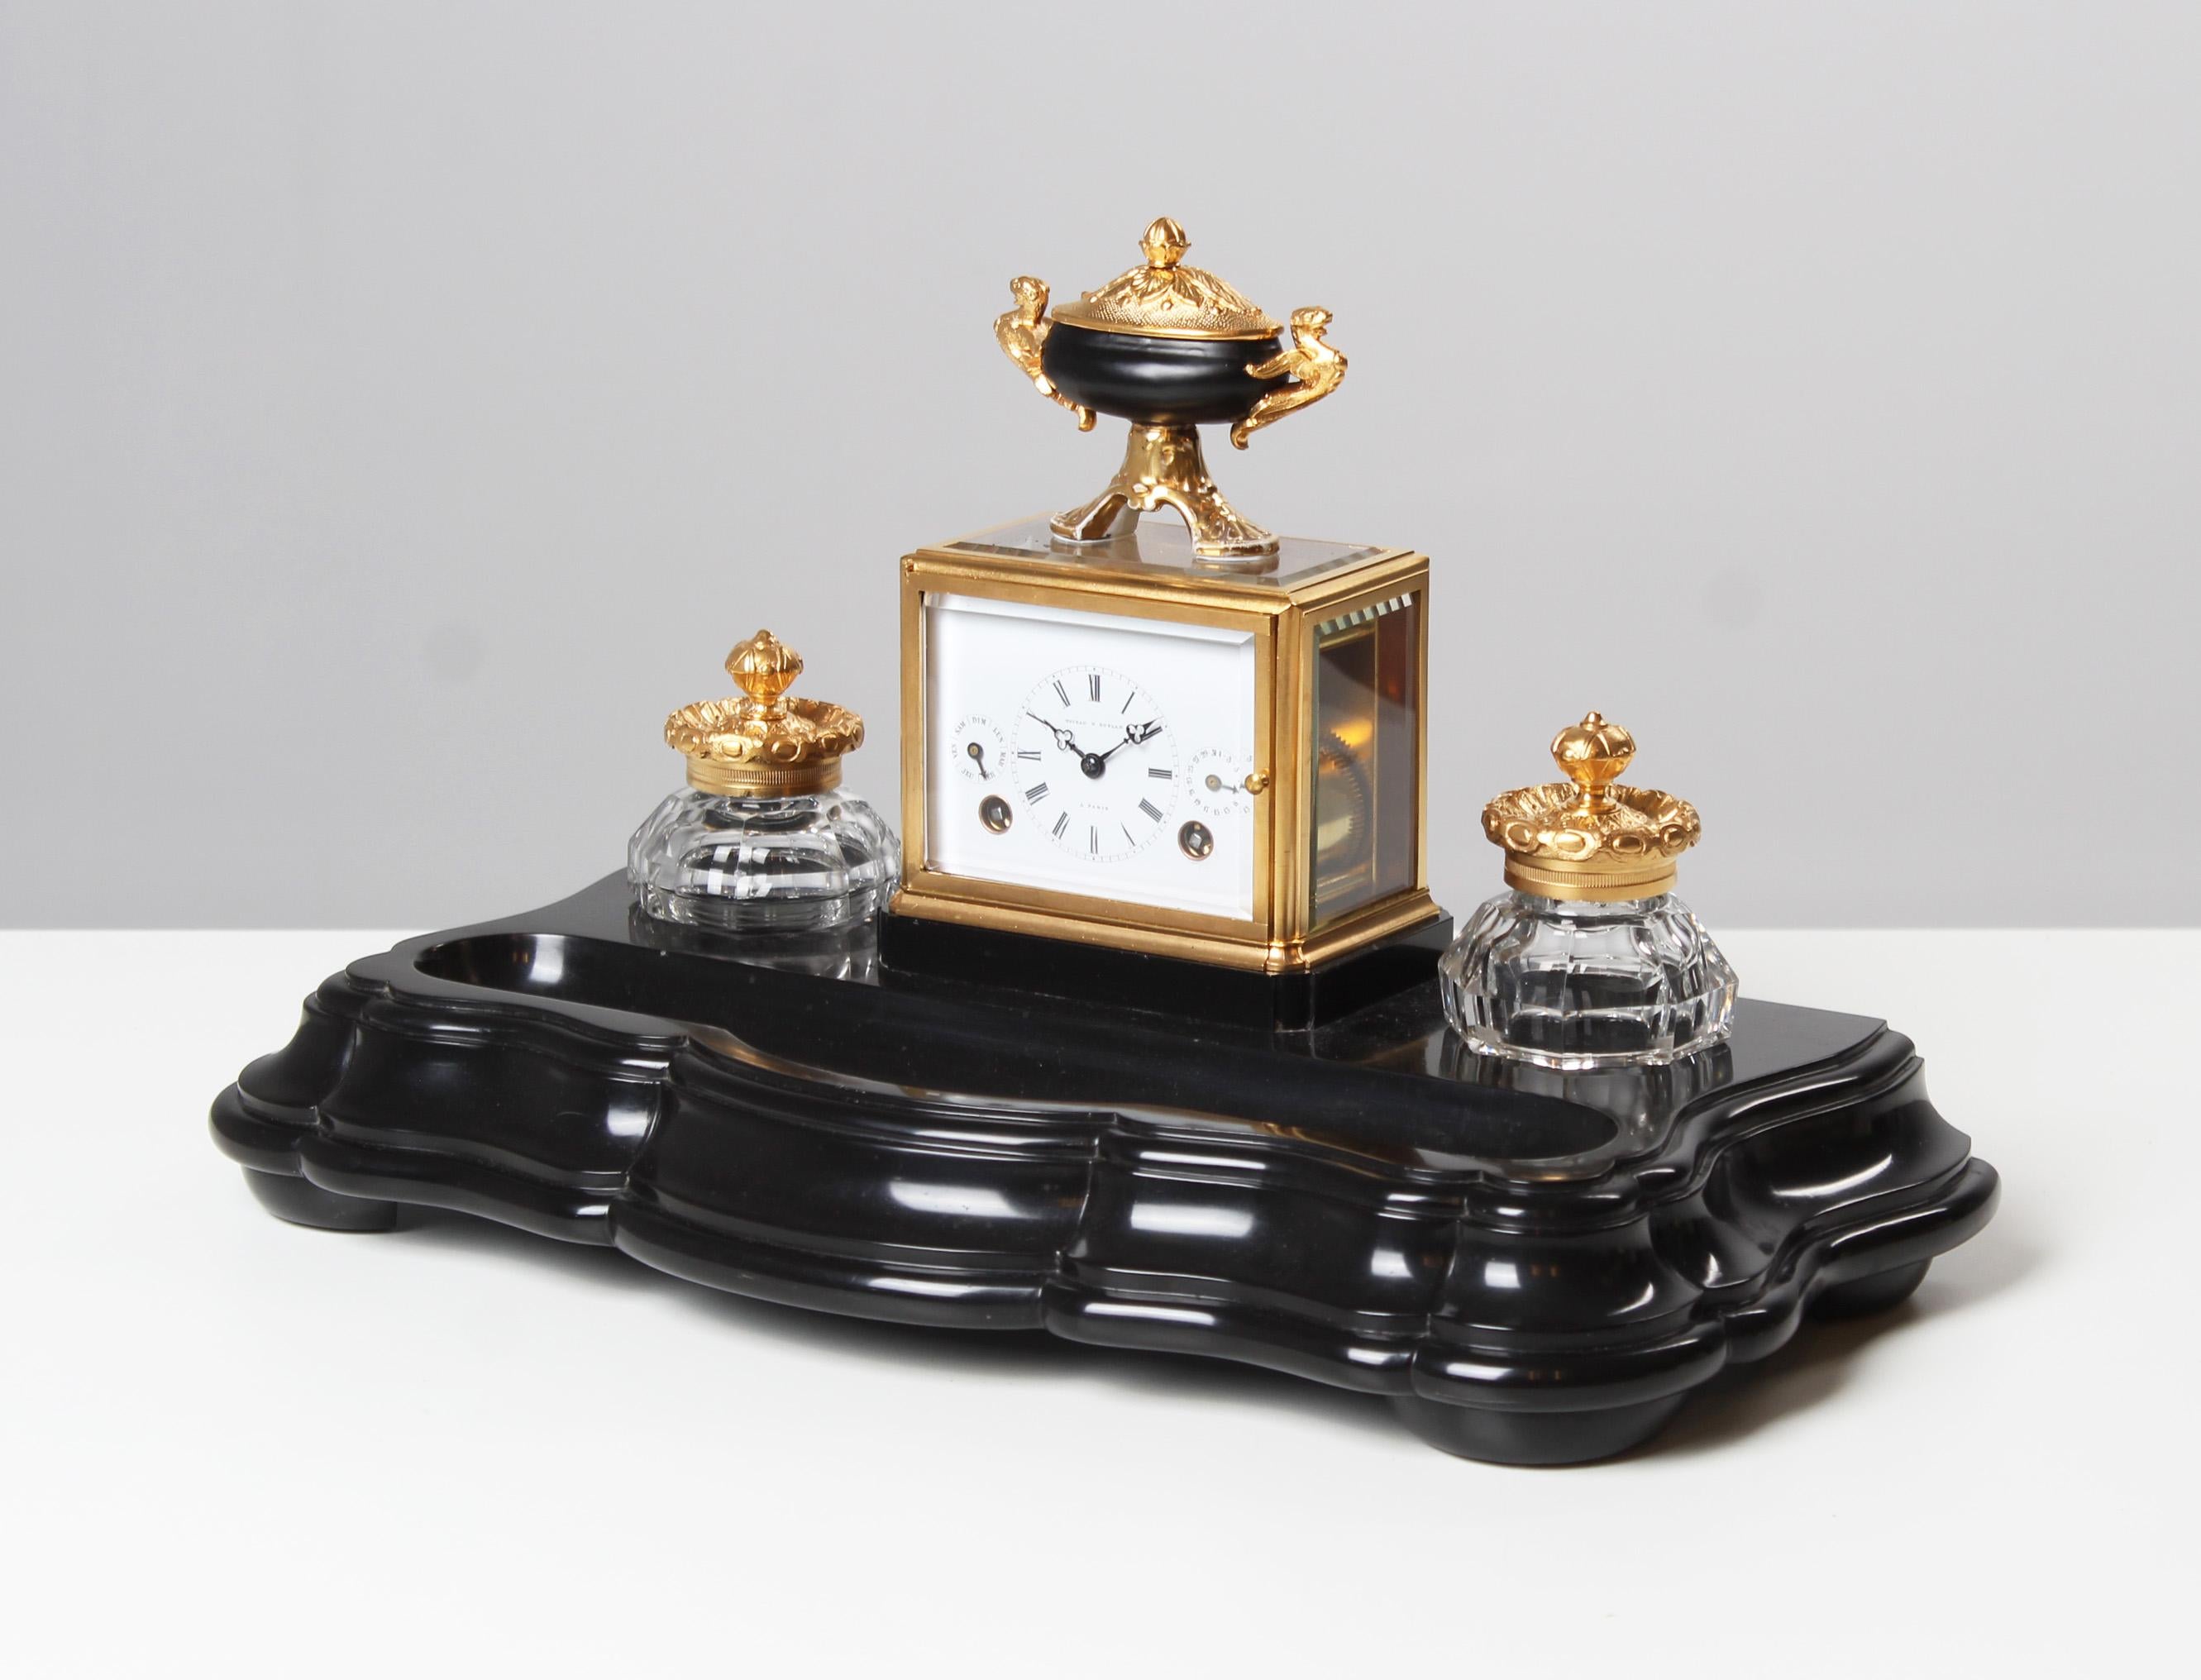 Brass Writing Set with Desk Clock, Carriage, Pendulette, Paris, Signed Moser, C. 1850